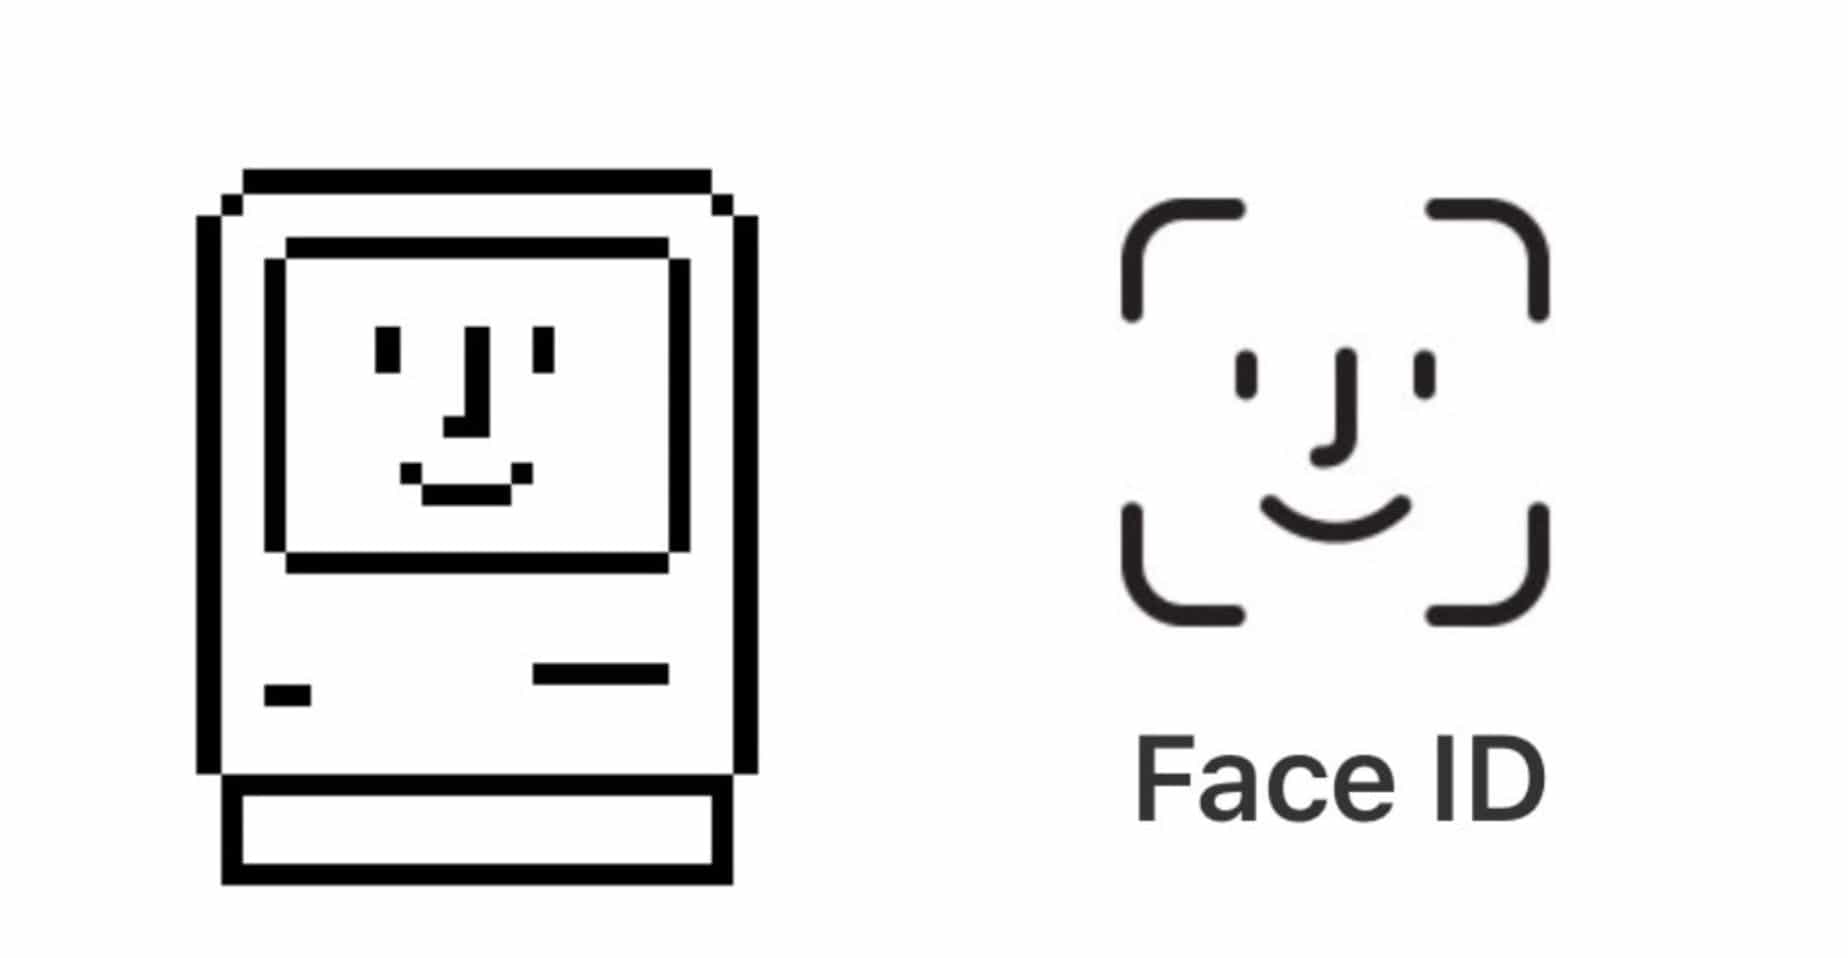 Mac Face Logo - Face ID logo resurrects a classic Macintosh icon | Cult of Mac